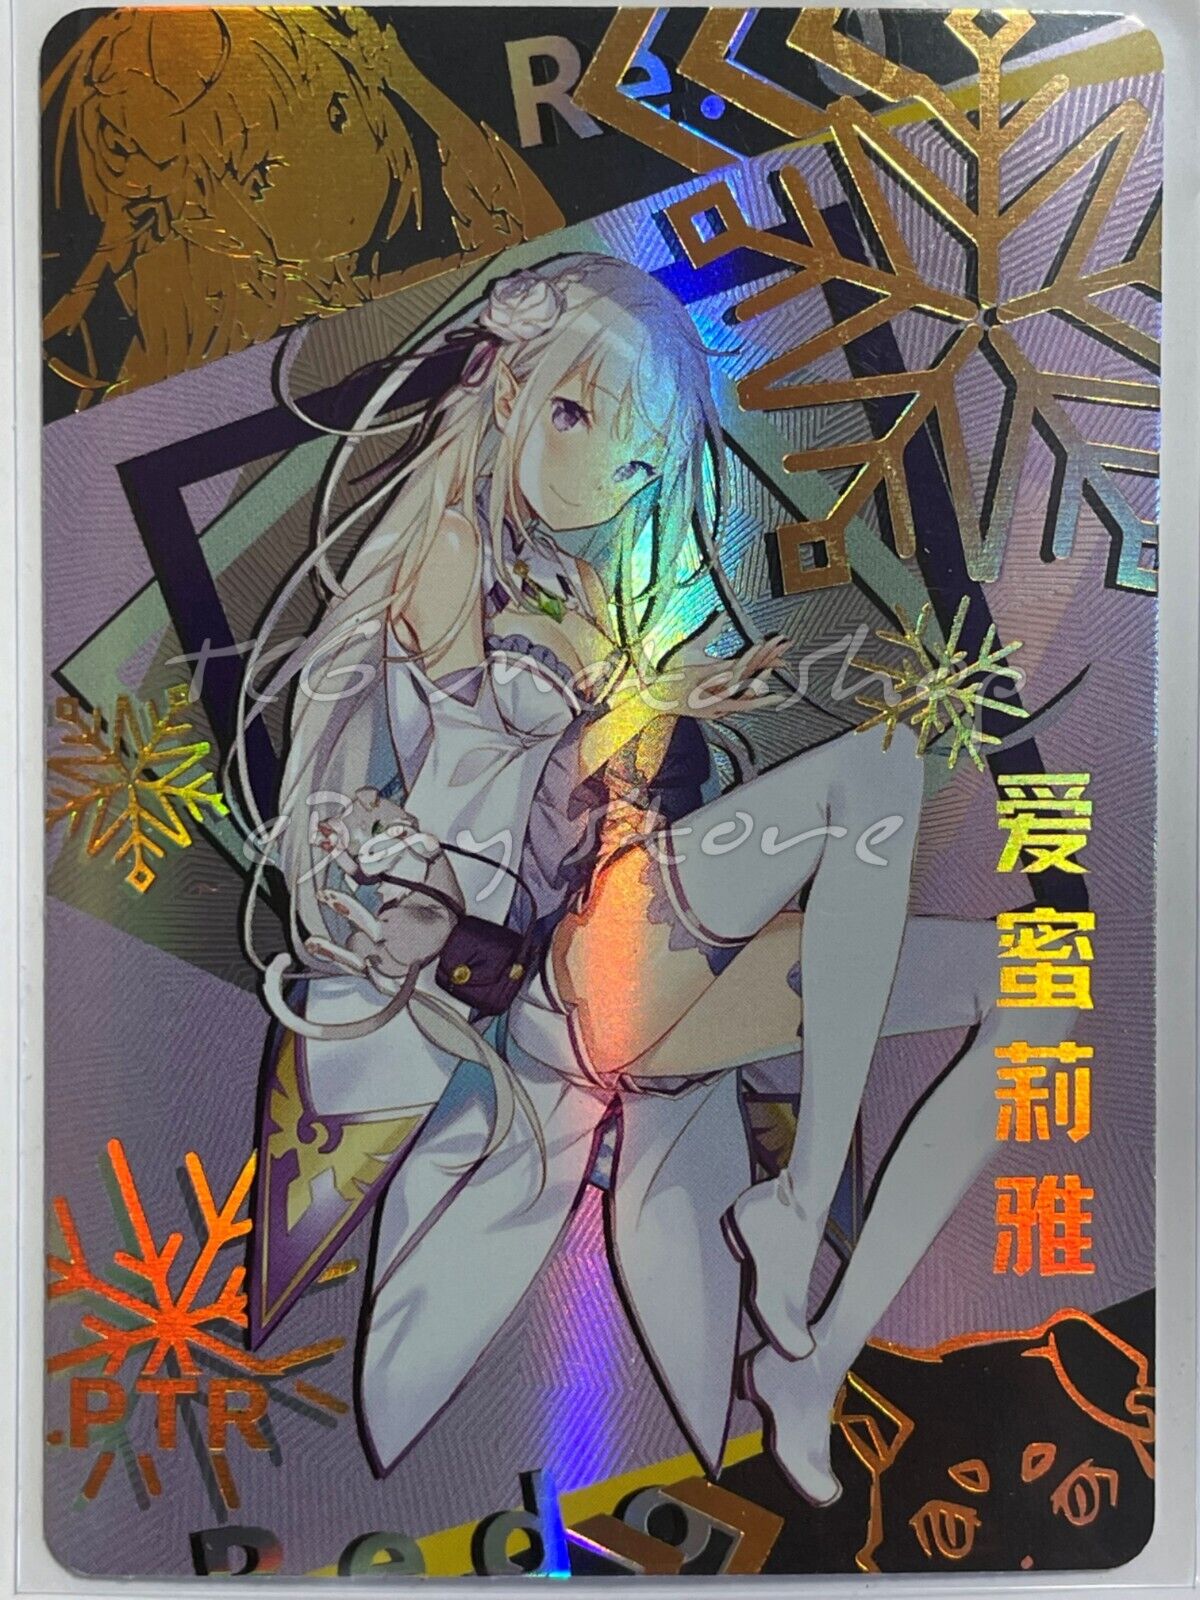 🔥 2m01 [Pick Your Singles PTR SSR SR] Goddess Story Waifu Anime Doujin Cards 🔥